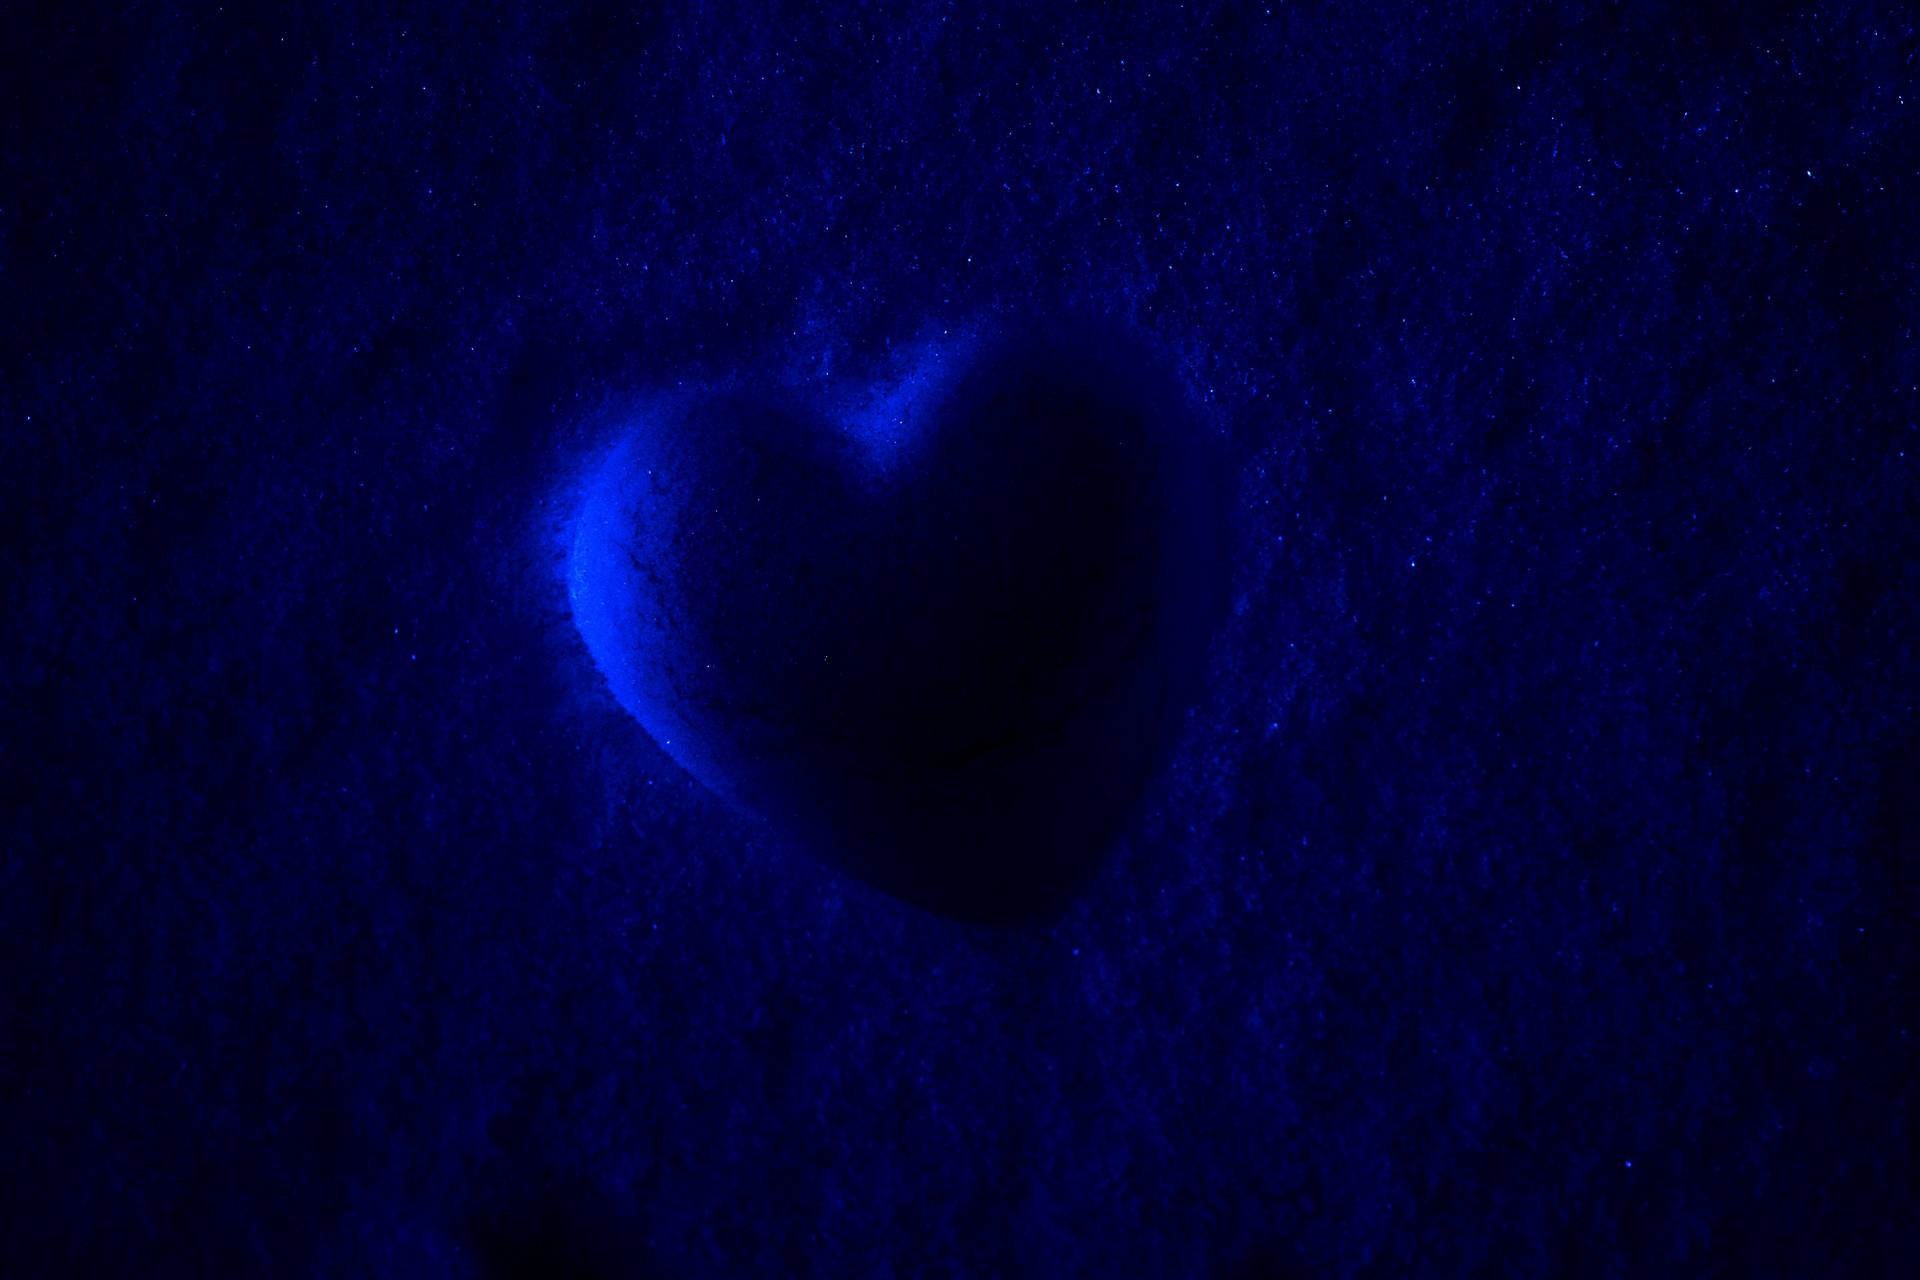 Dark Blue Heart